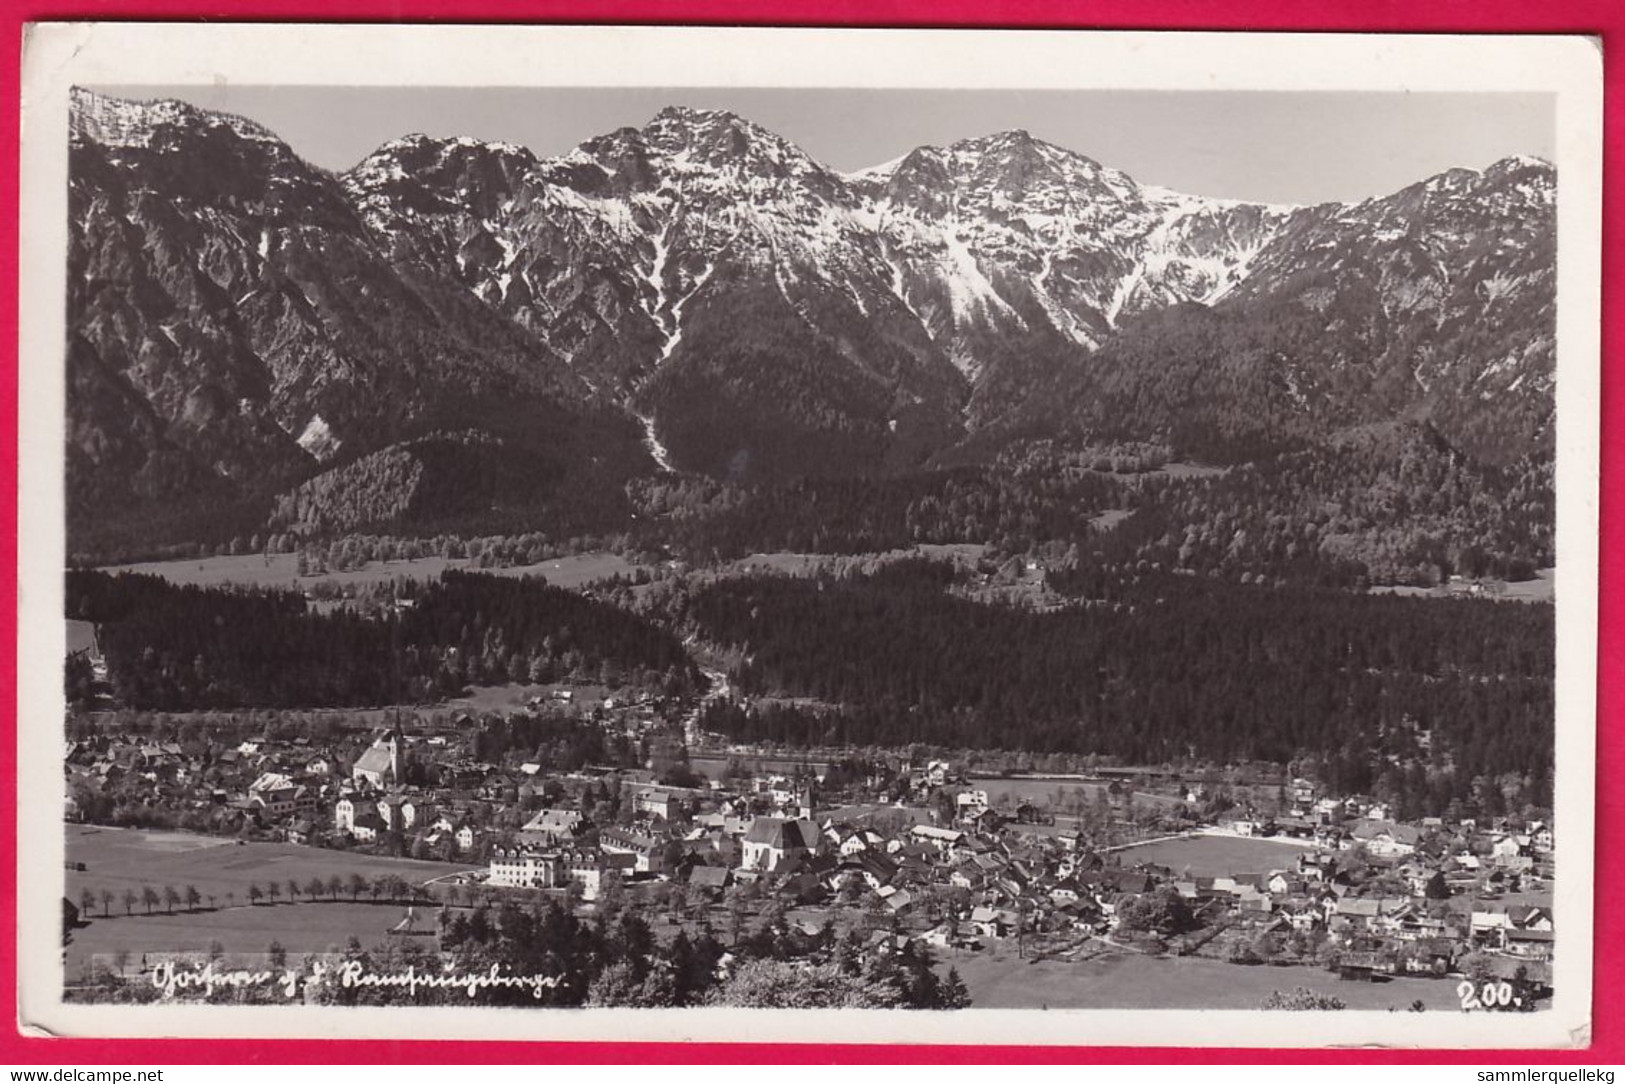 AK: Echtfoto - Goisern, Gelaufen 29. XI. 1933 (Nr. 5175) - Bad Goisern